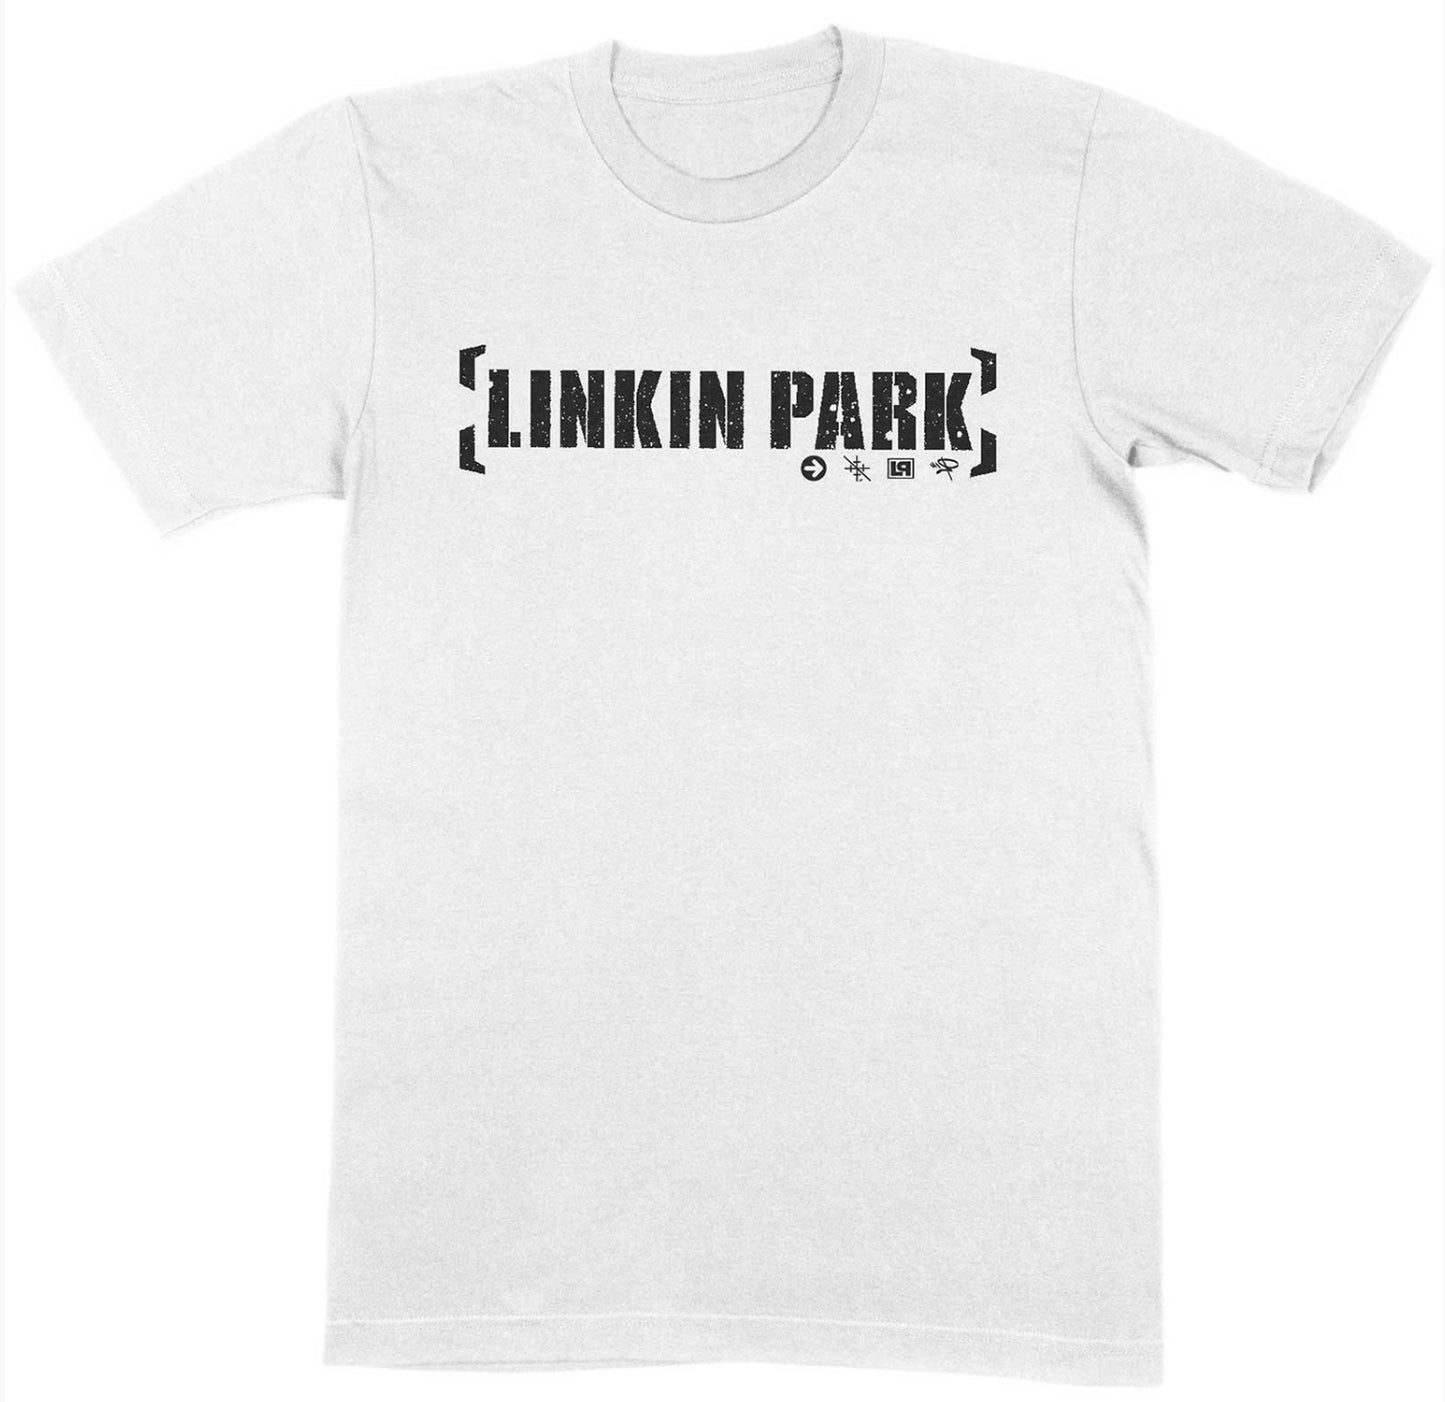 Linkin Park T-shirts